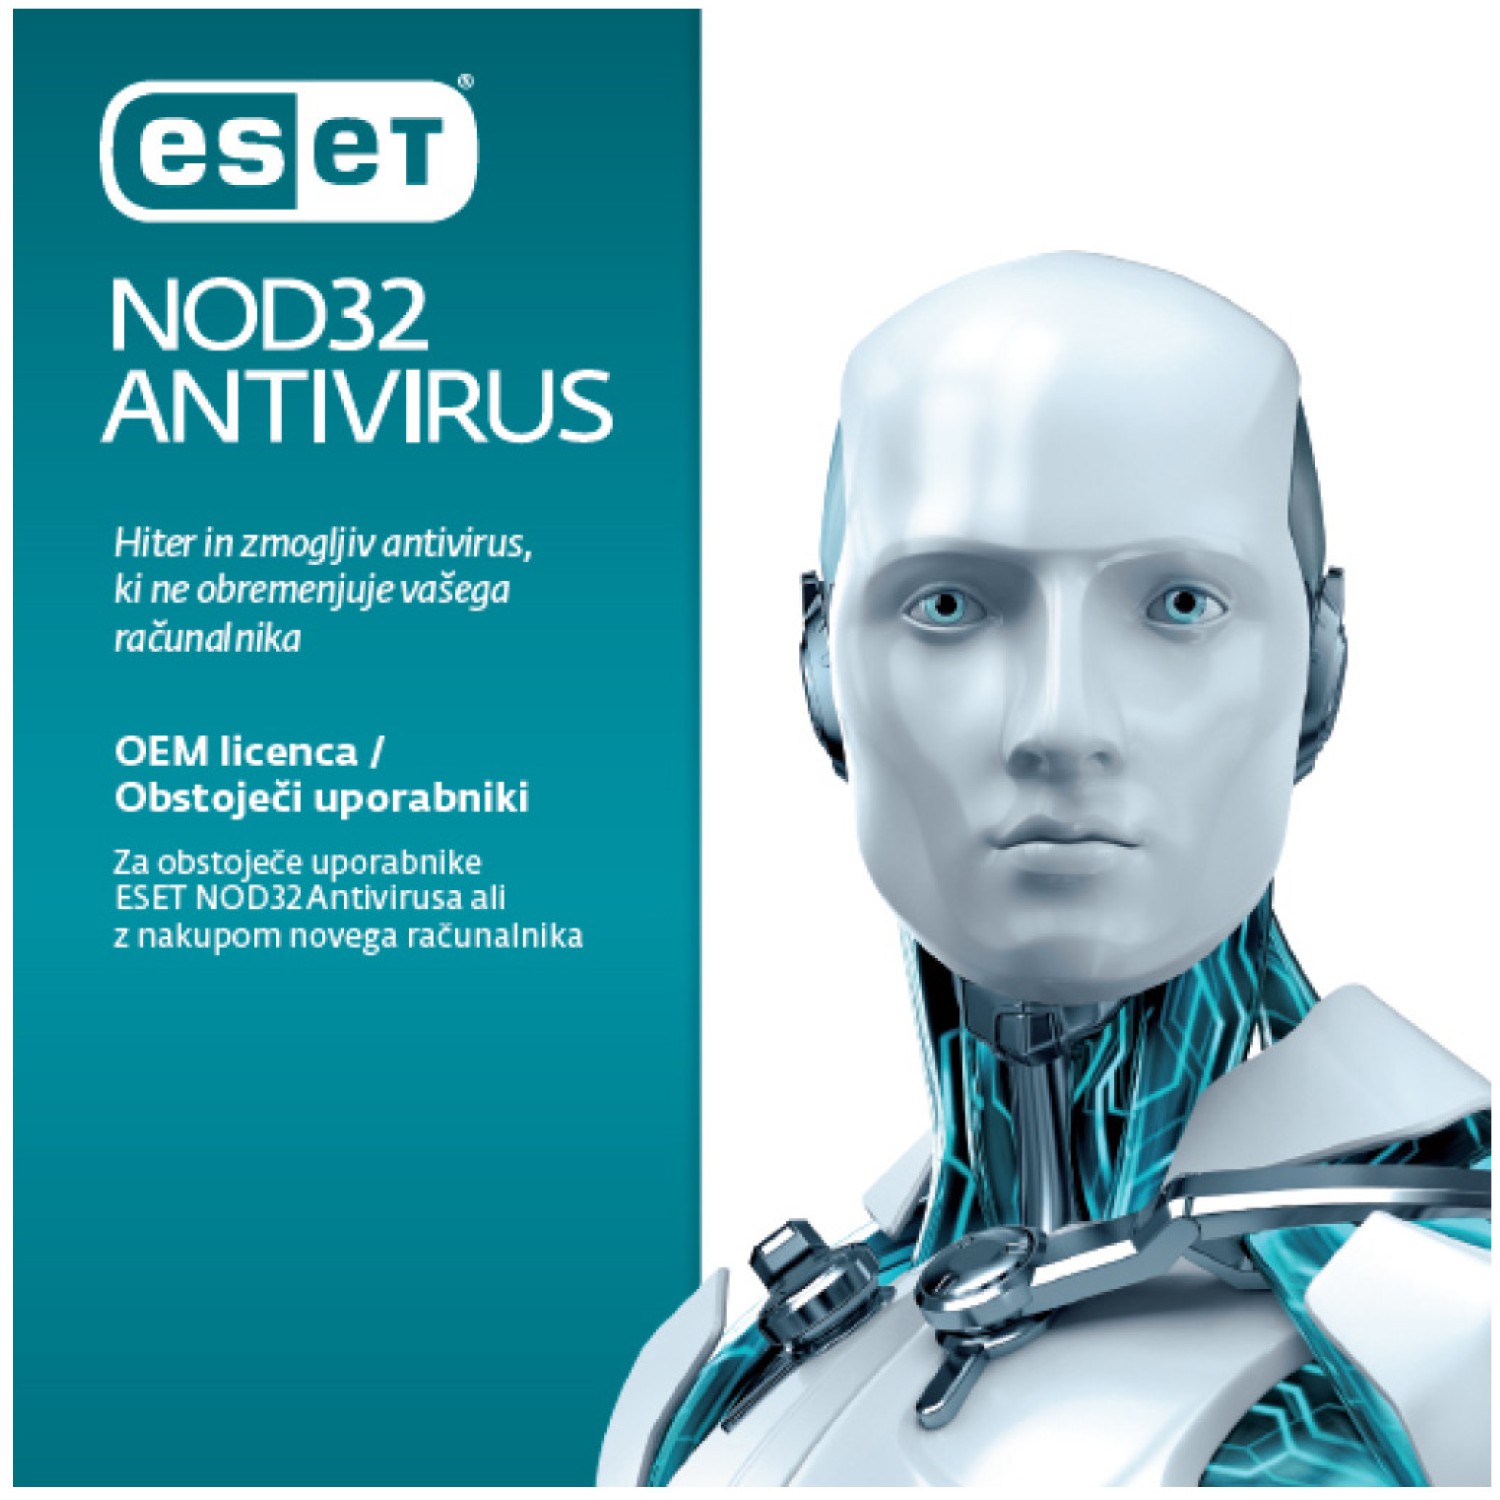 Antivirus ESET NOD32 for WORKSTATION OEM - key